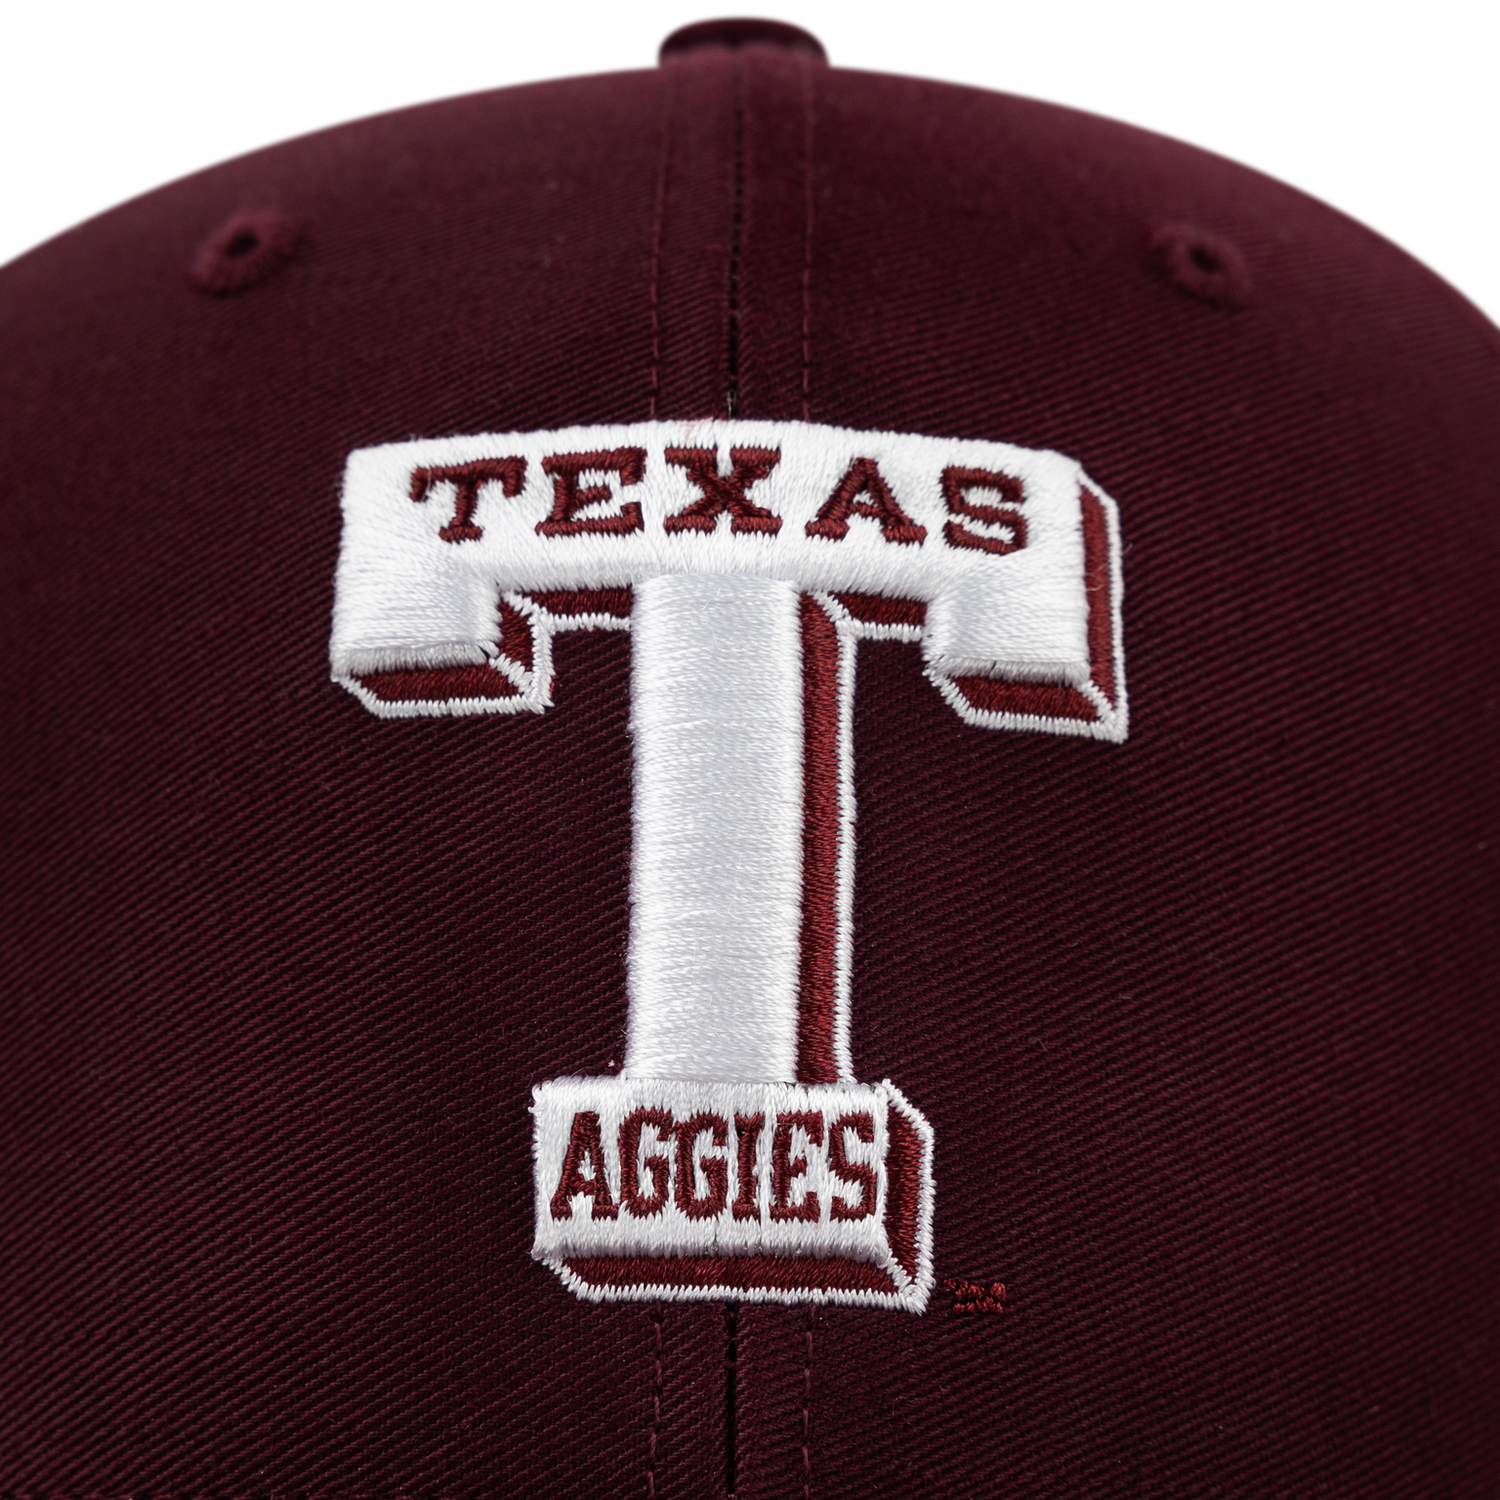 Texas A&M Trucker Block Hat